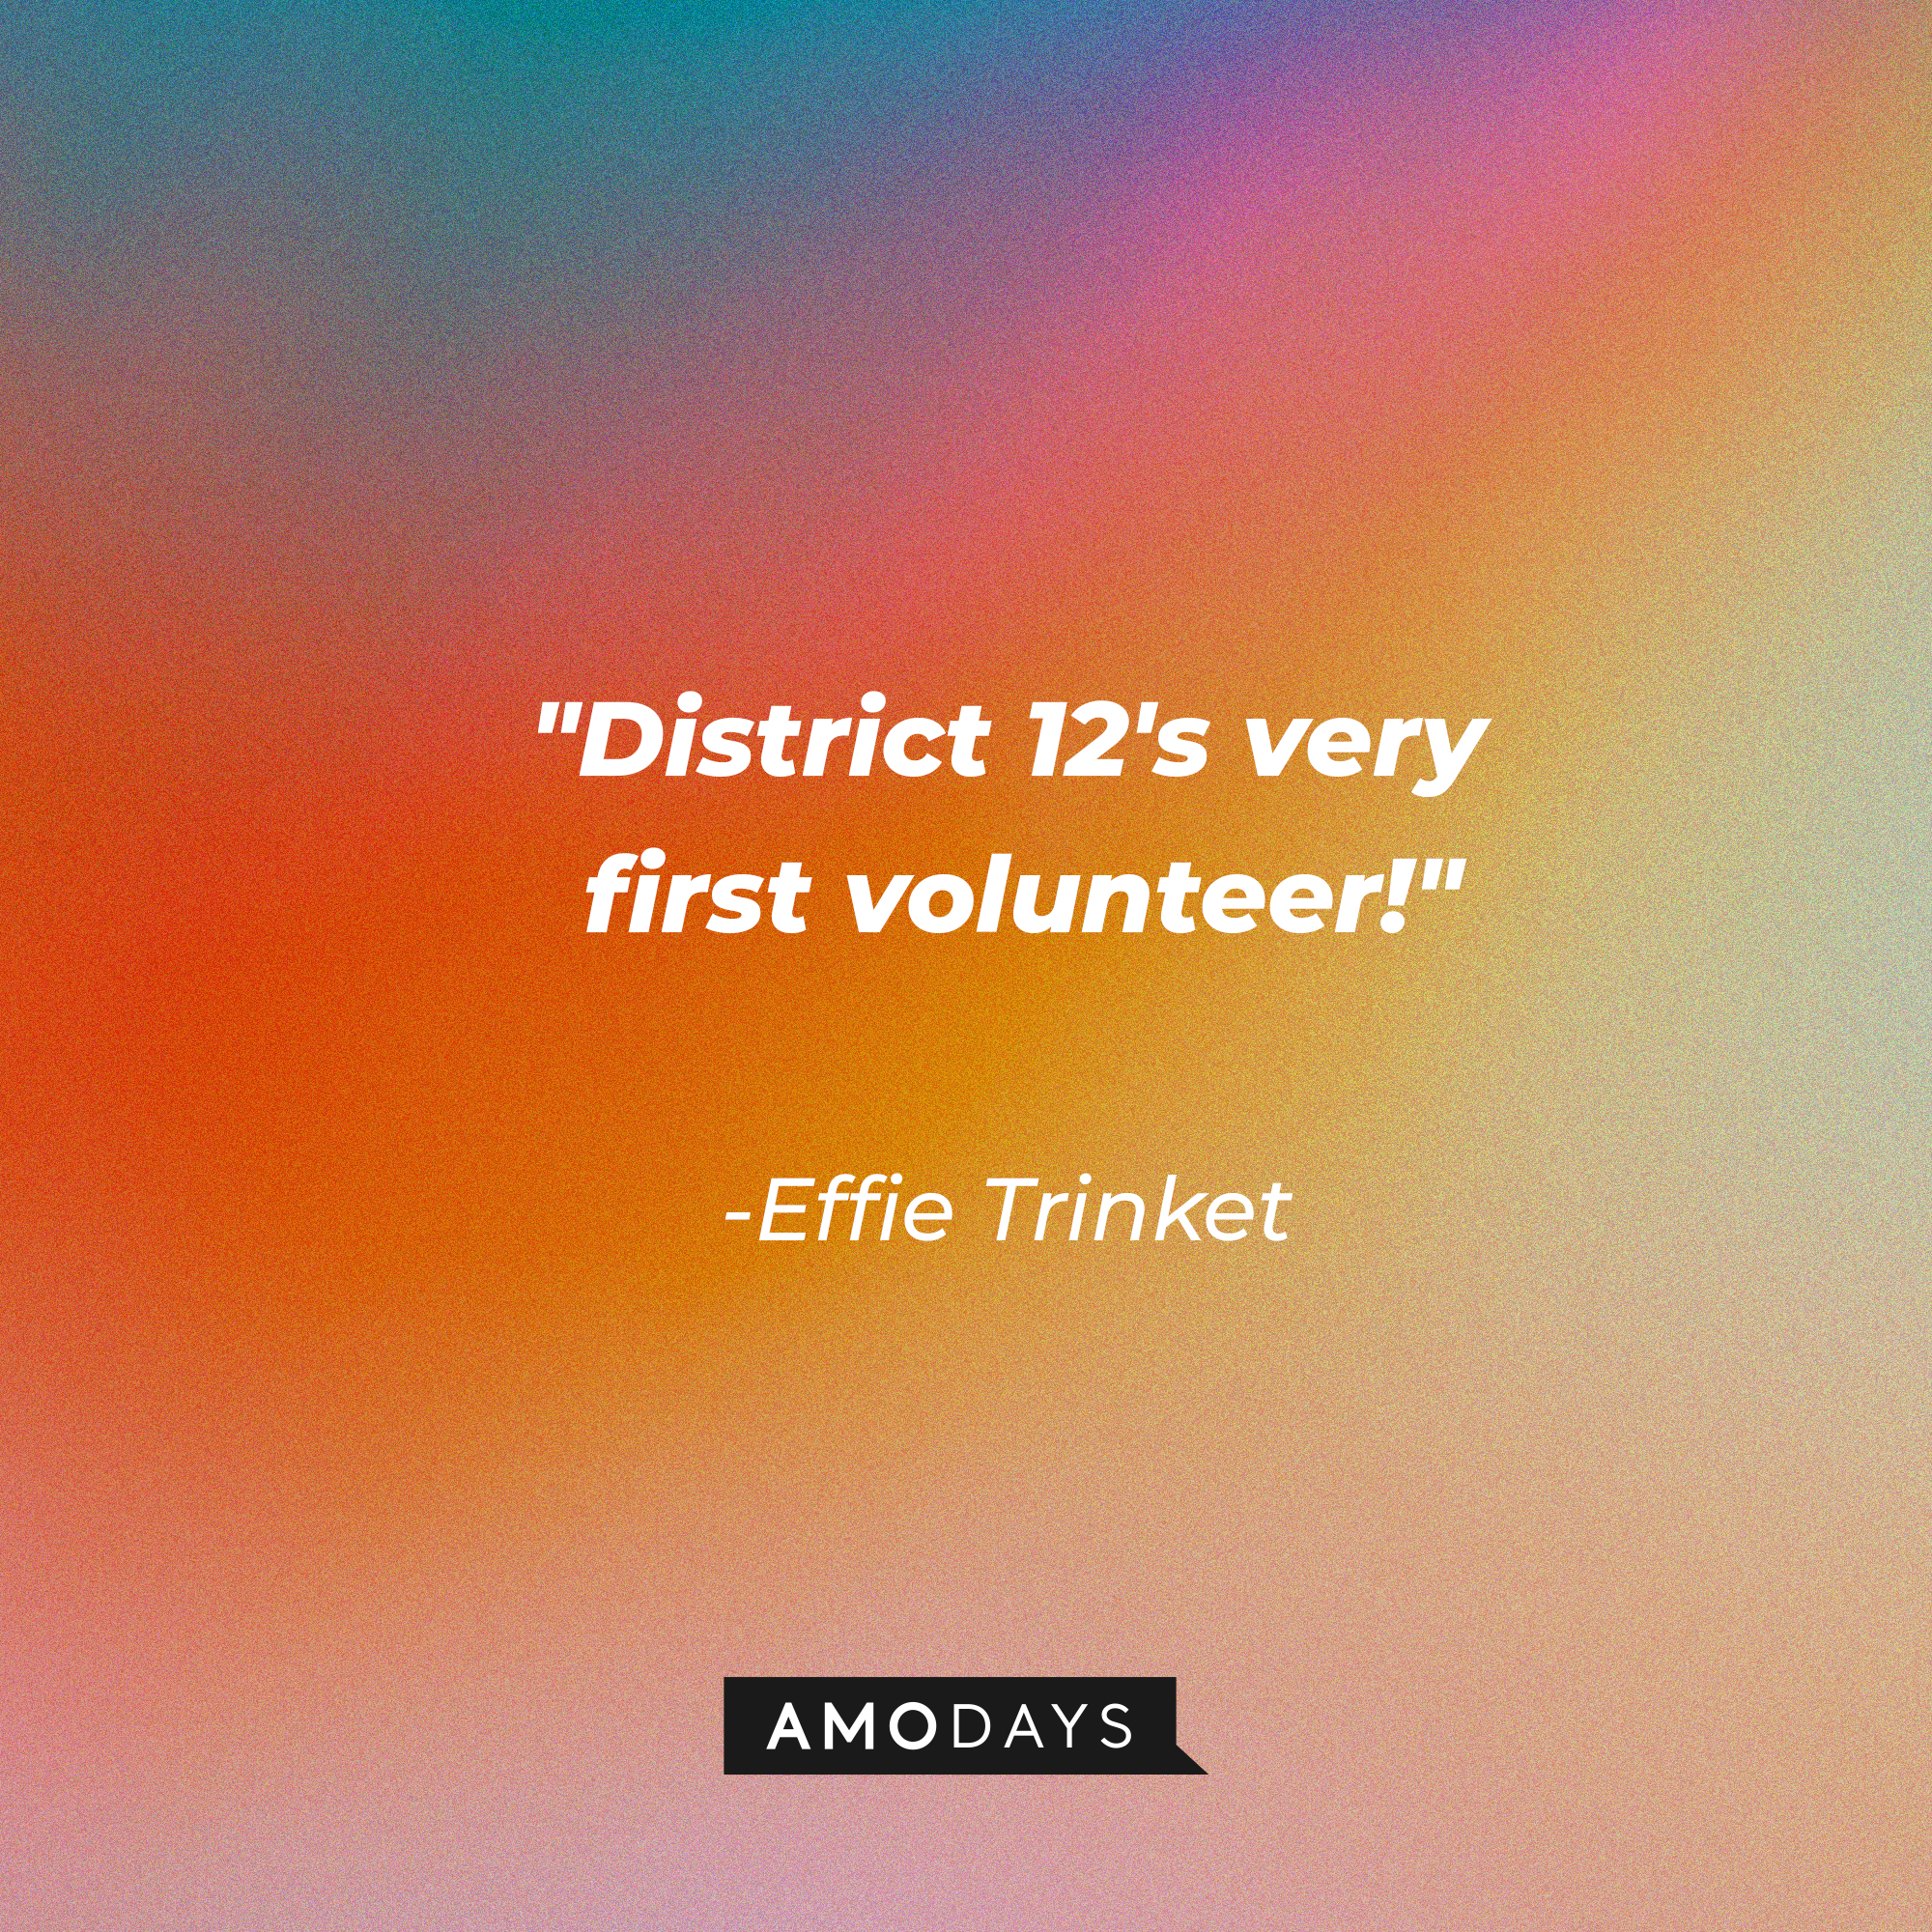 Effie Trinket’s quote: "District 12's very first volunteer!" | Source: AmoDays